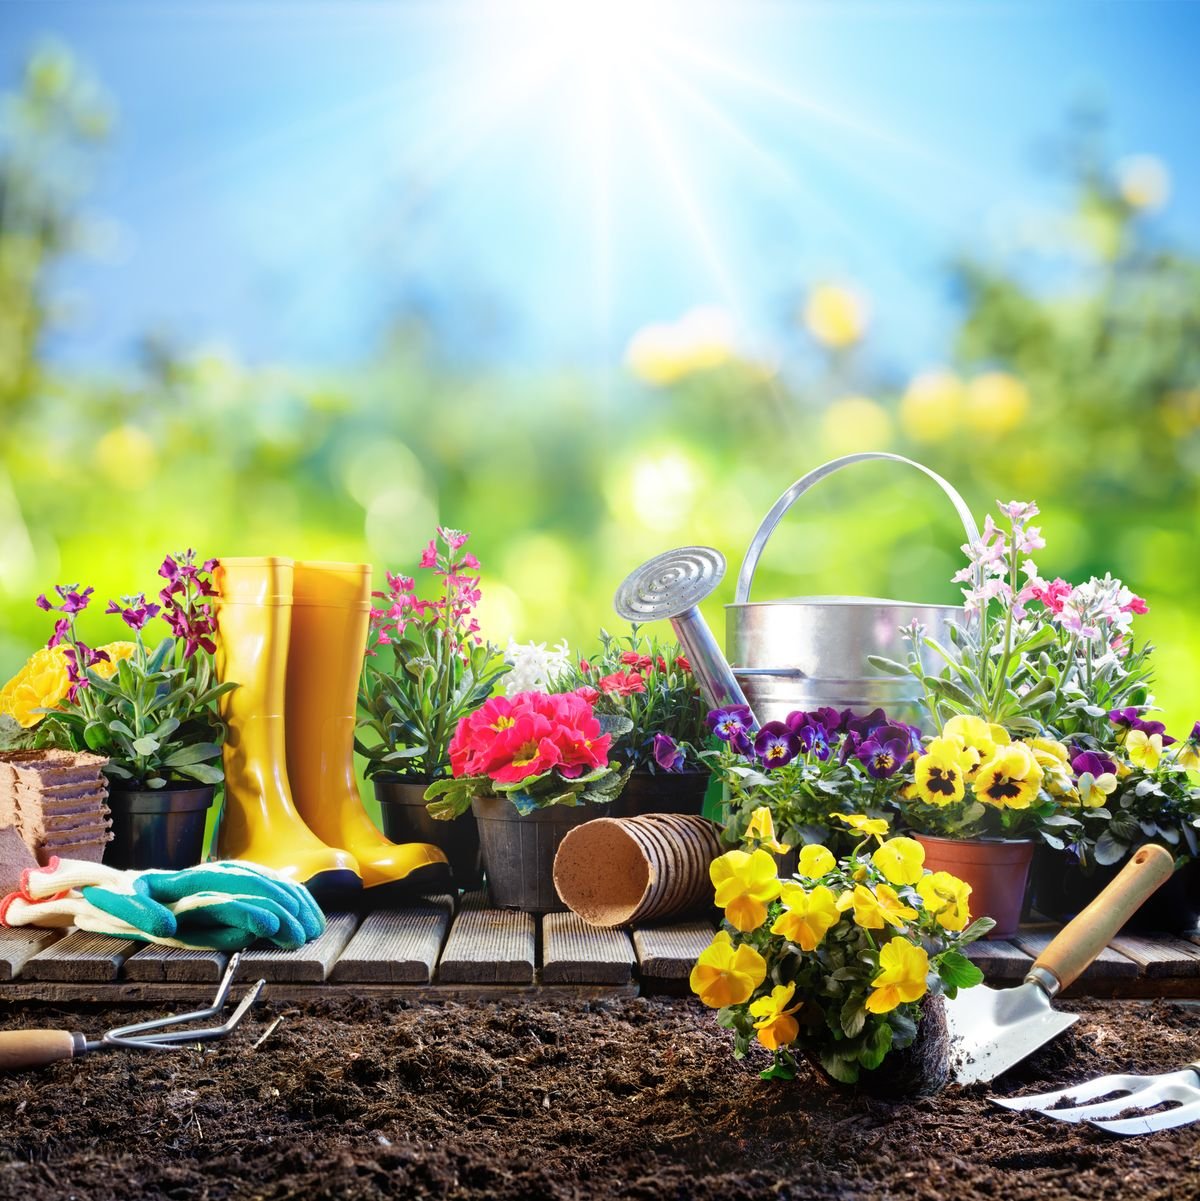 gardening-equipment-for-gardener-with-flowerpots-royalty-free-image-643182988-1555499917